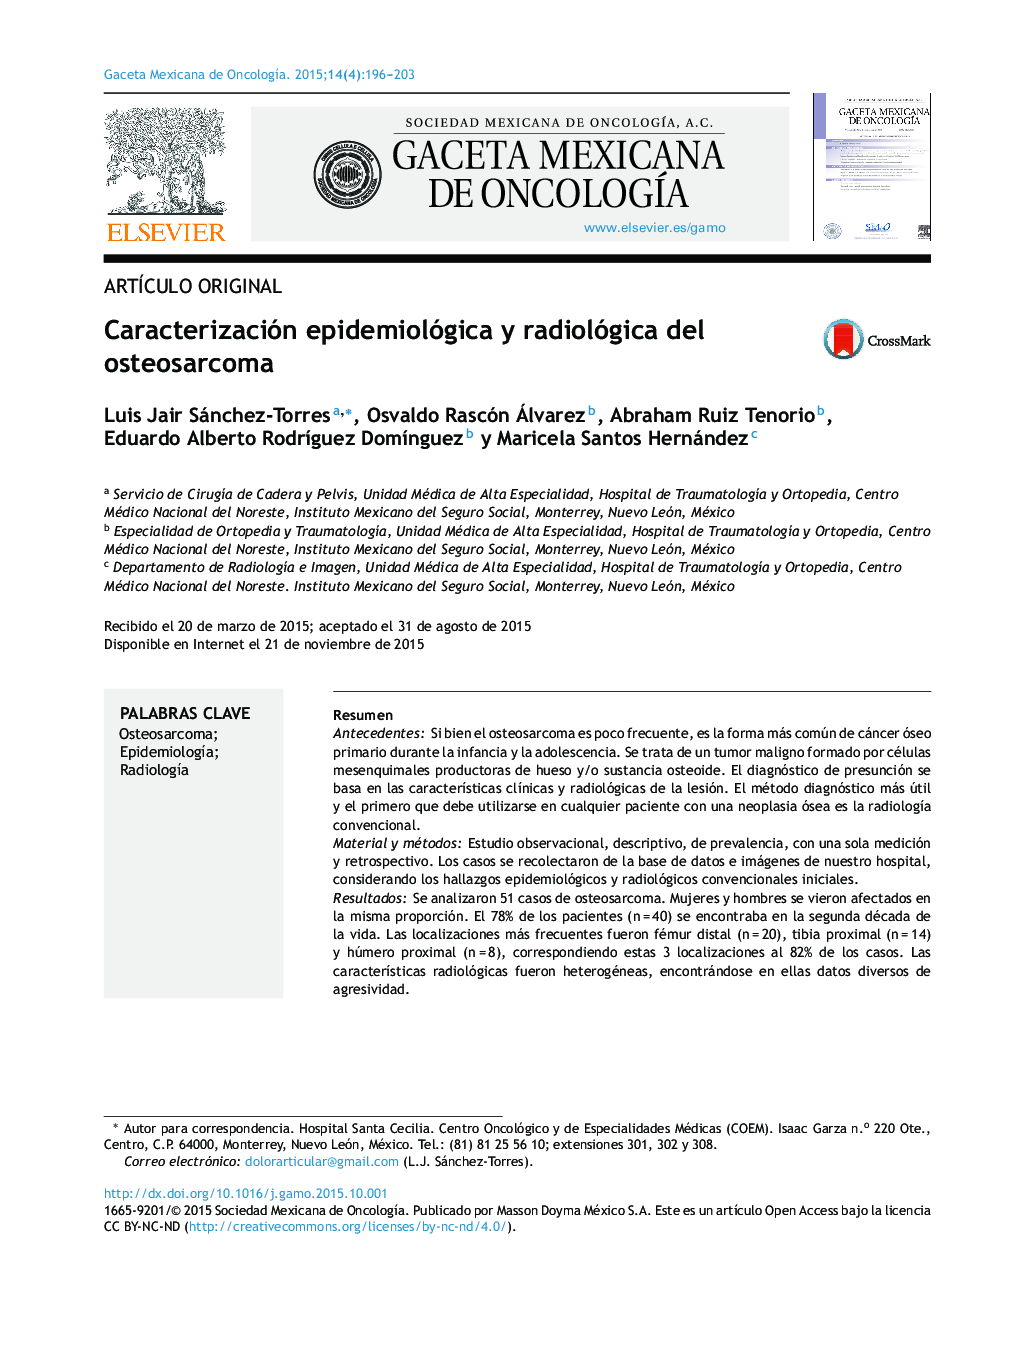 Caracterización epidemiológica y radiológica del osteosarcoma